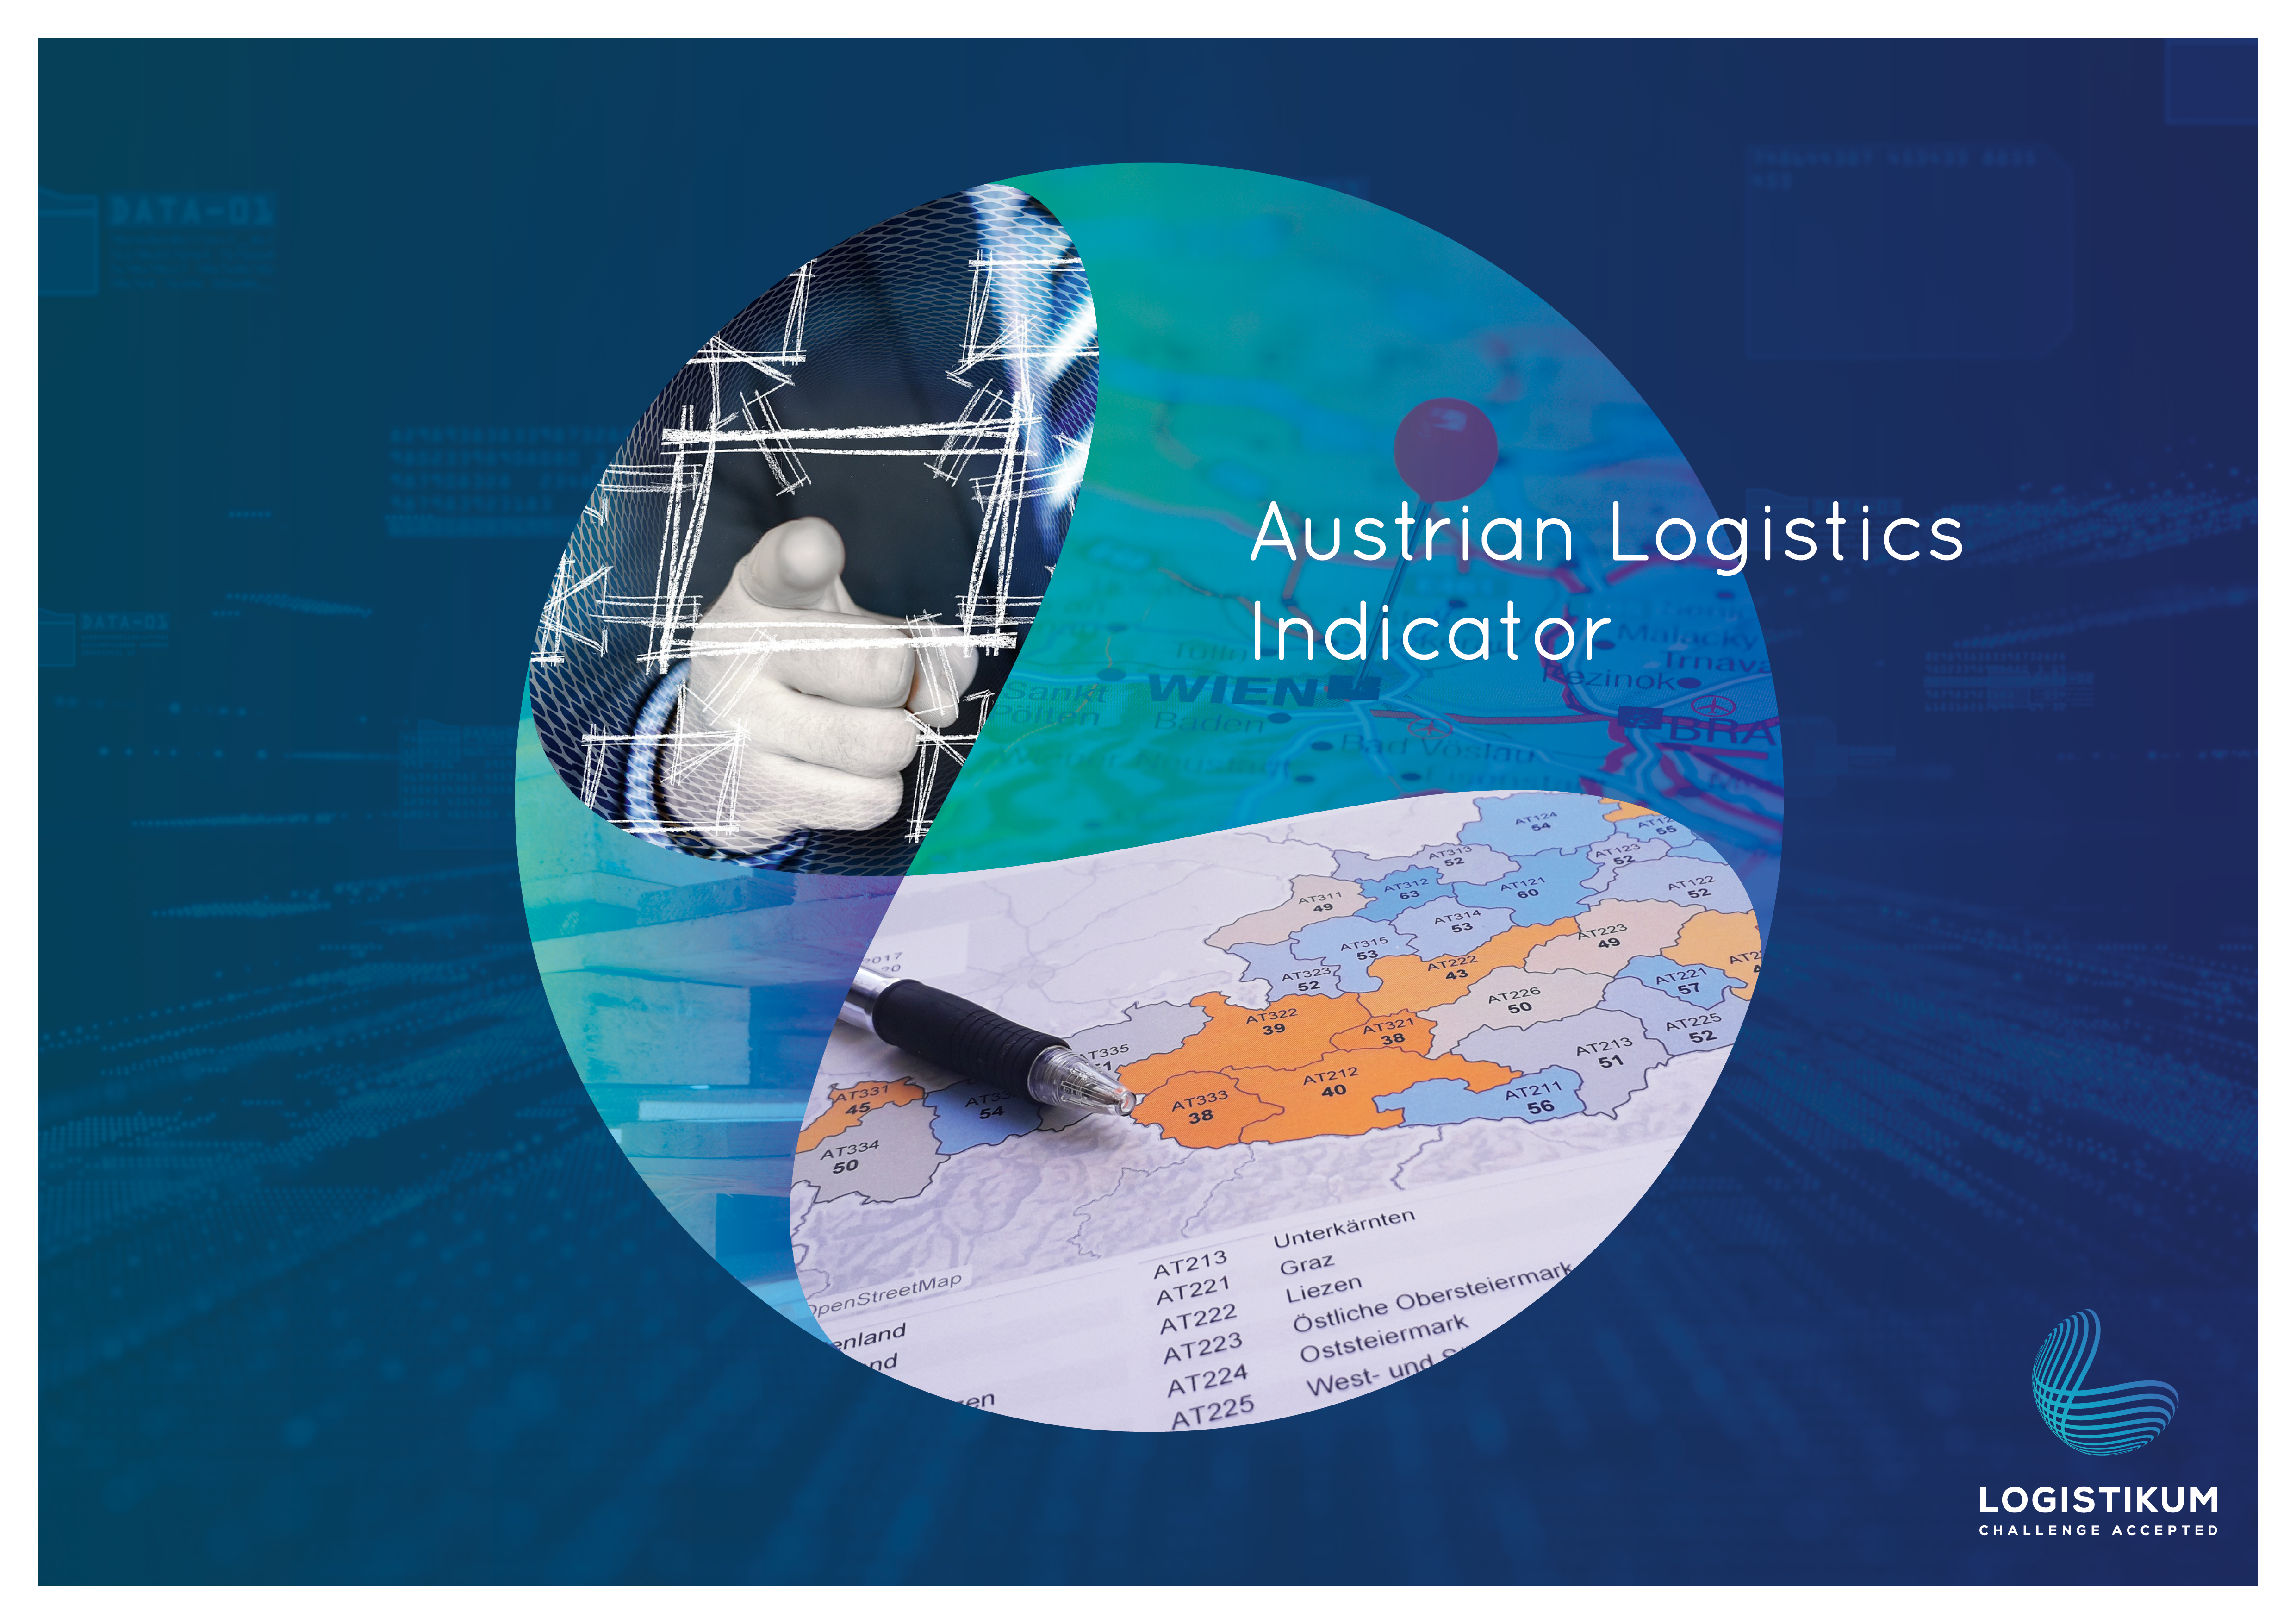 ALI - Austrian Logistics Indicator